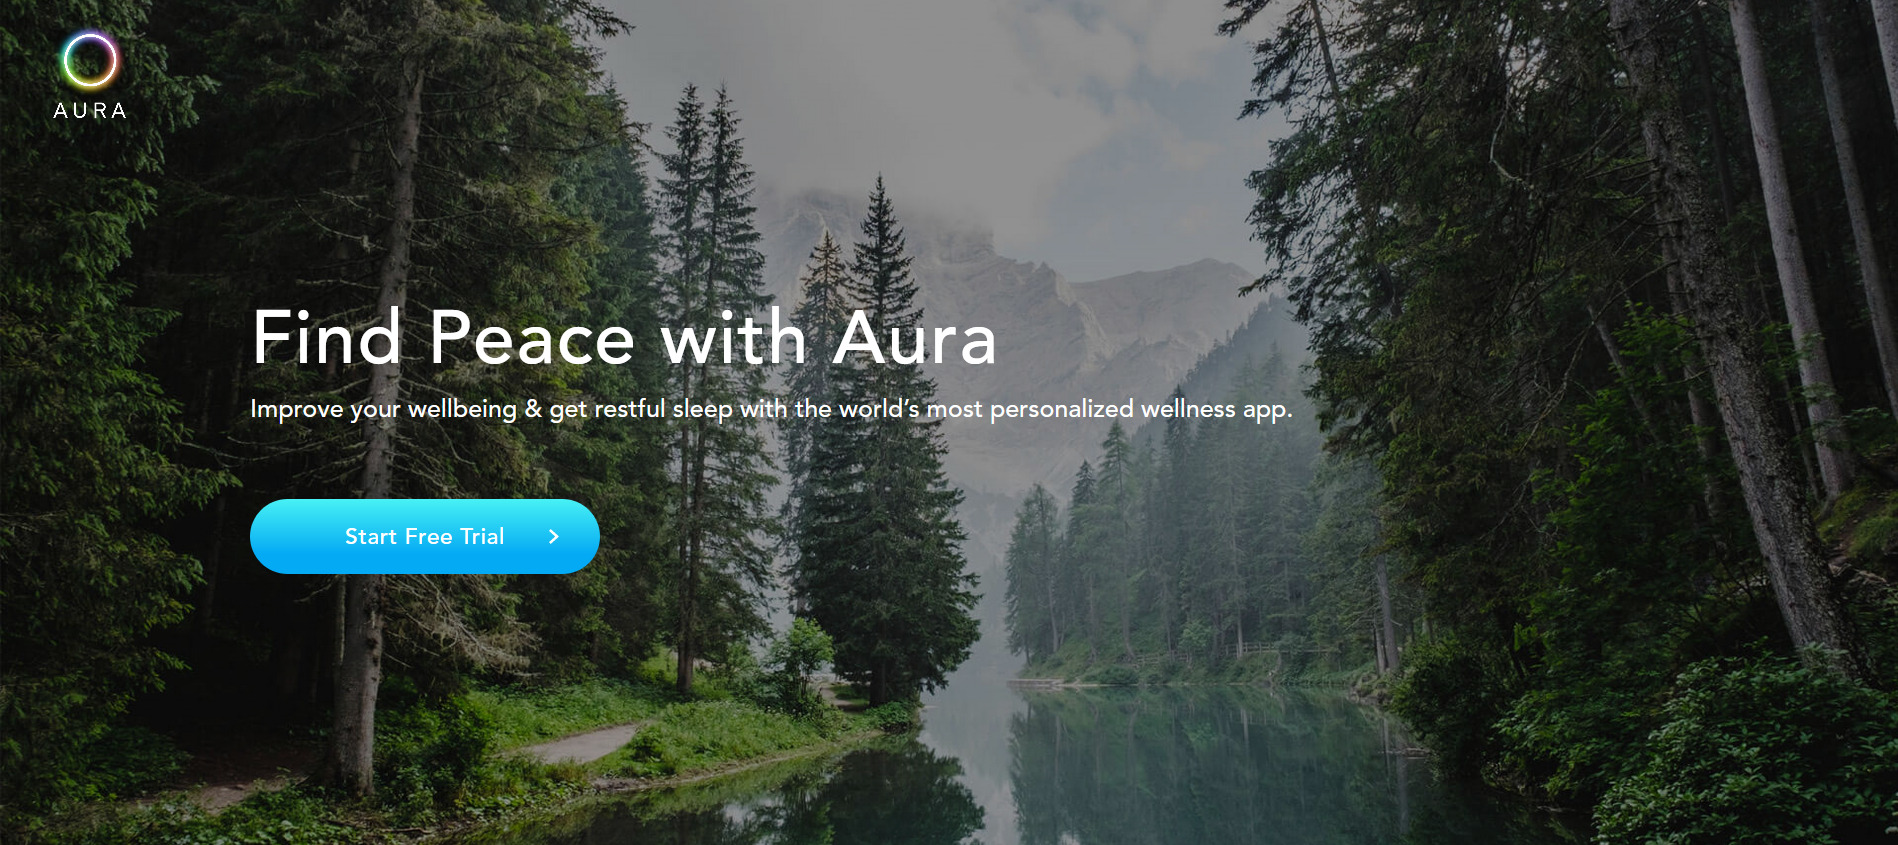 Find detailed information about Aura